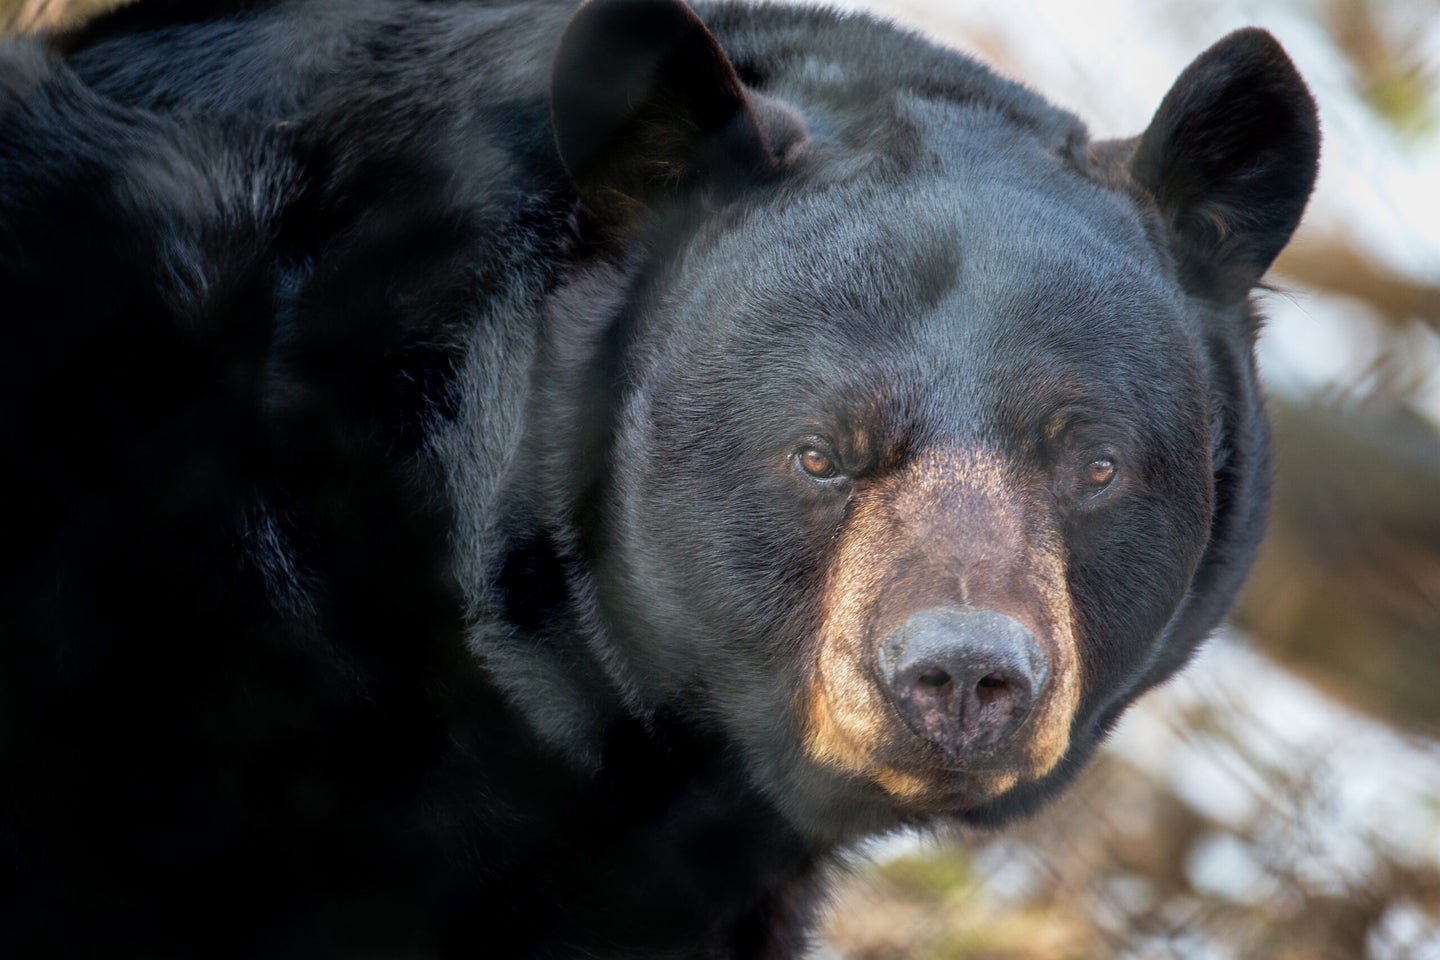 Up Close Shot of Black Bear